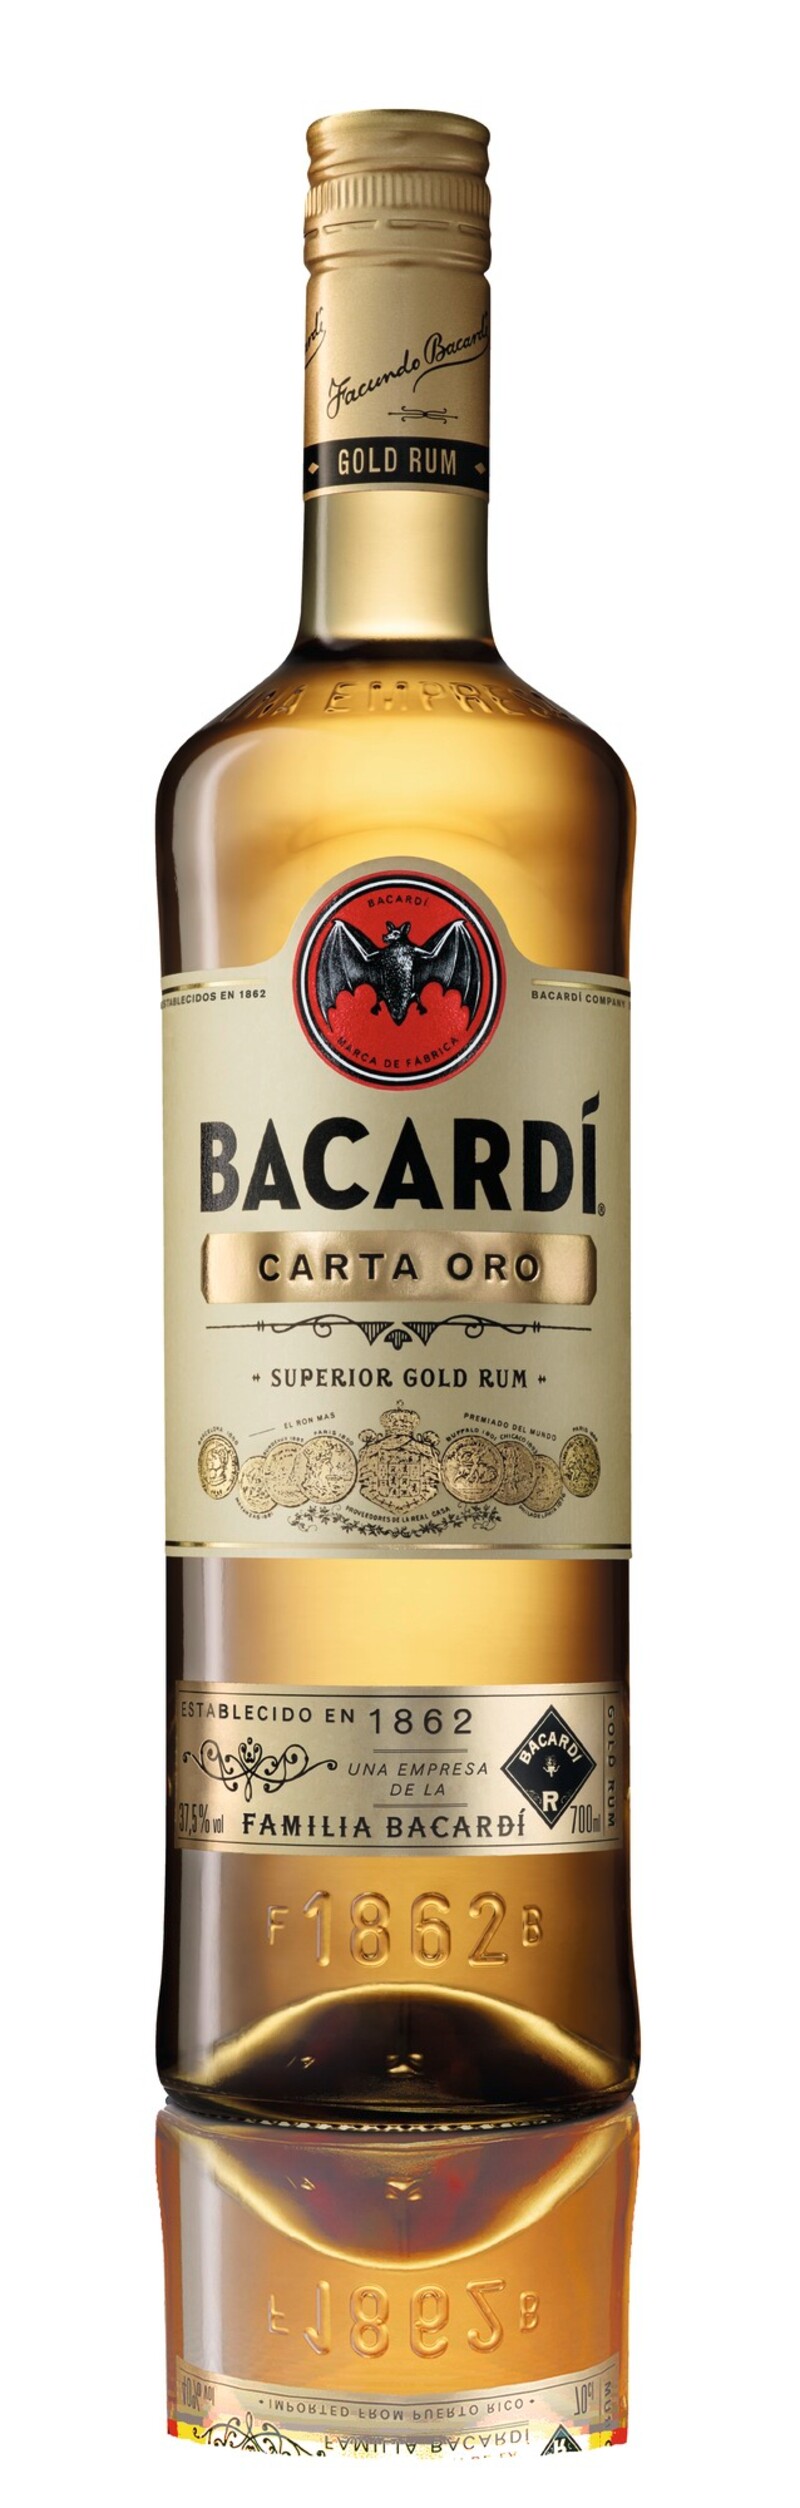 Bacardi Oro brauner Rum  Fl. (0,7 Lt.) 